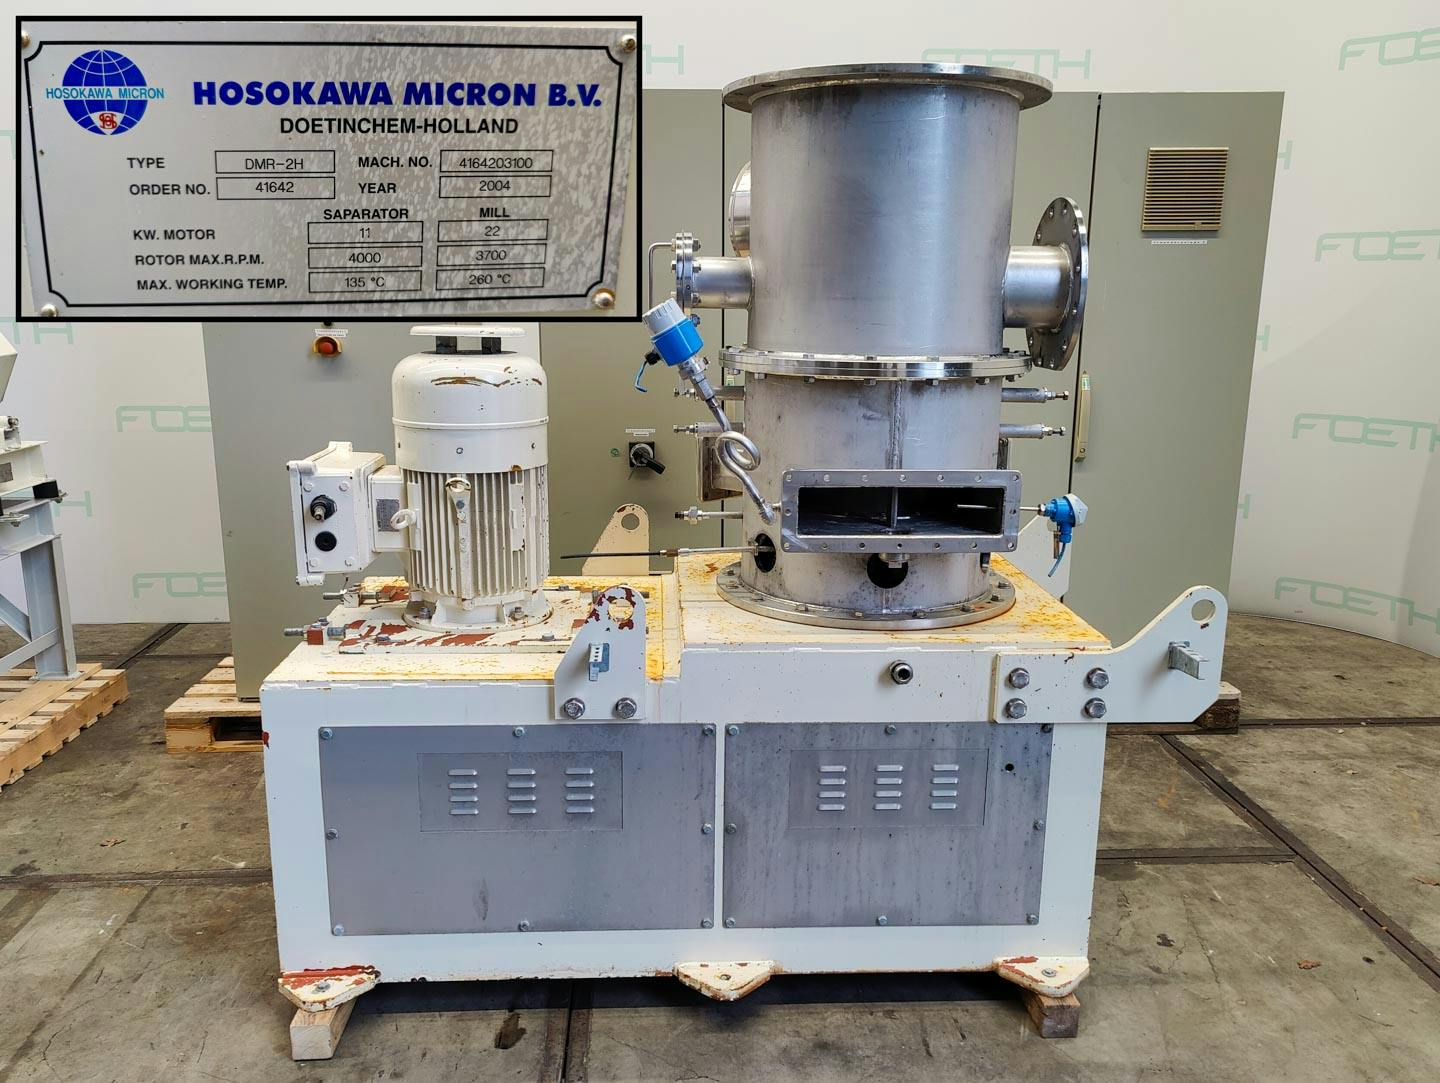 Hosokawa Micron DMR-2H FLASH-DROGER - Drying system - Continu droger - image 4